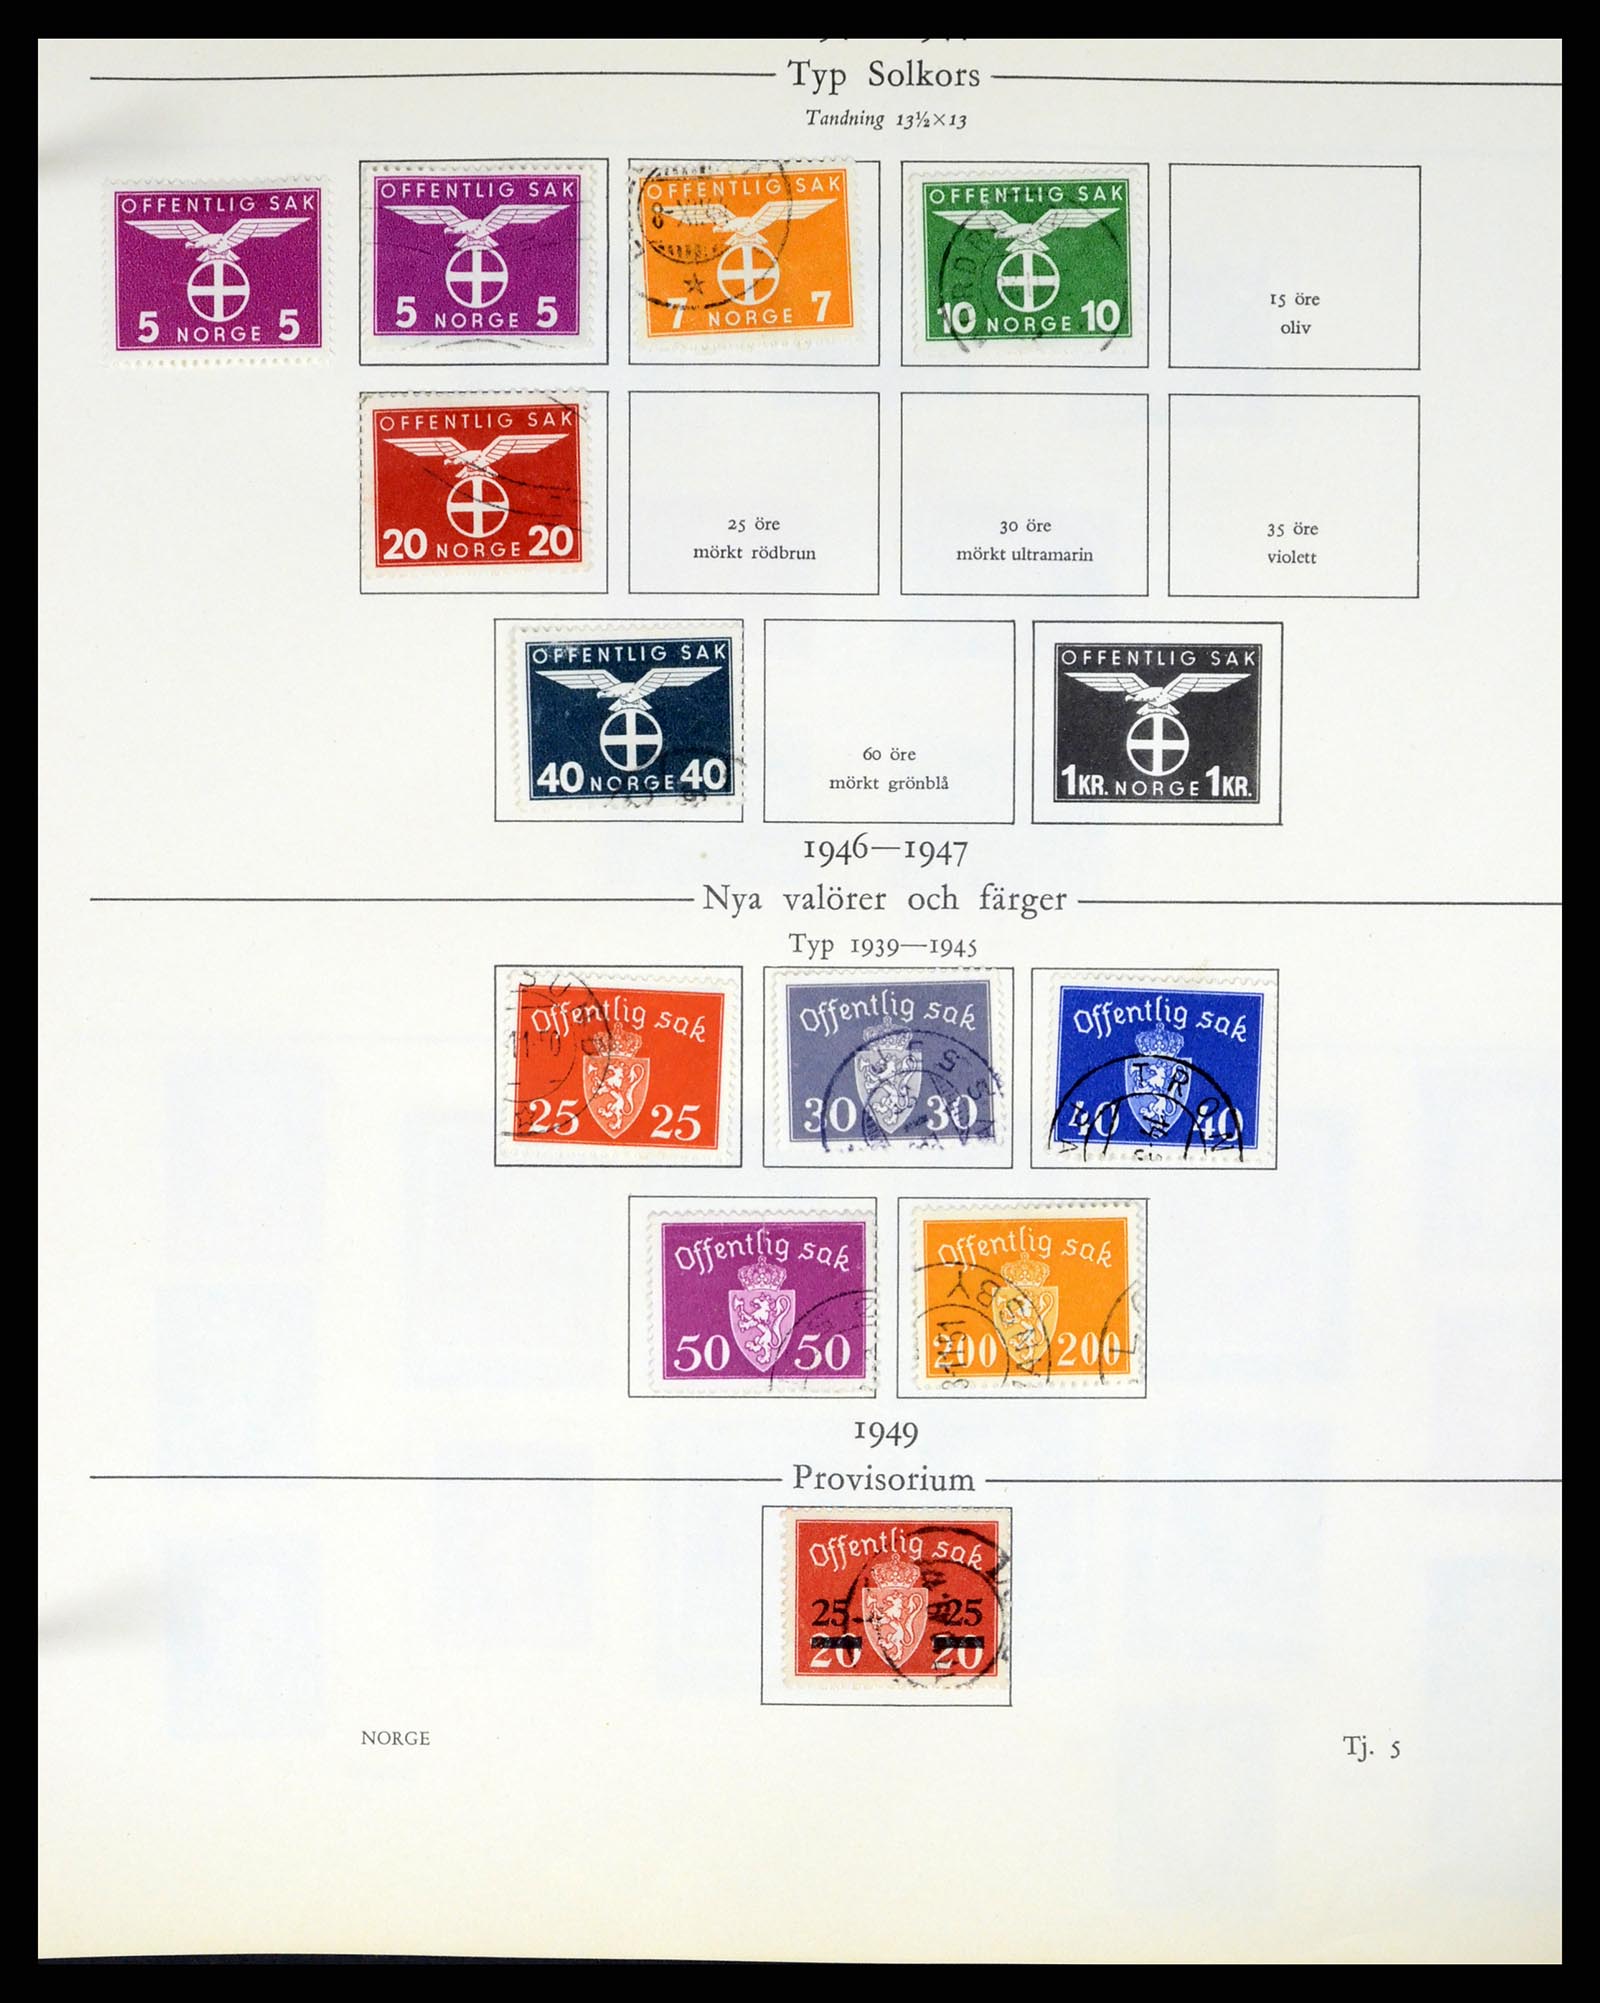 37387 048 - Stamp collection 37387 Scandinavia 1851-1960.